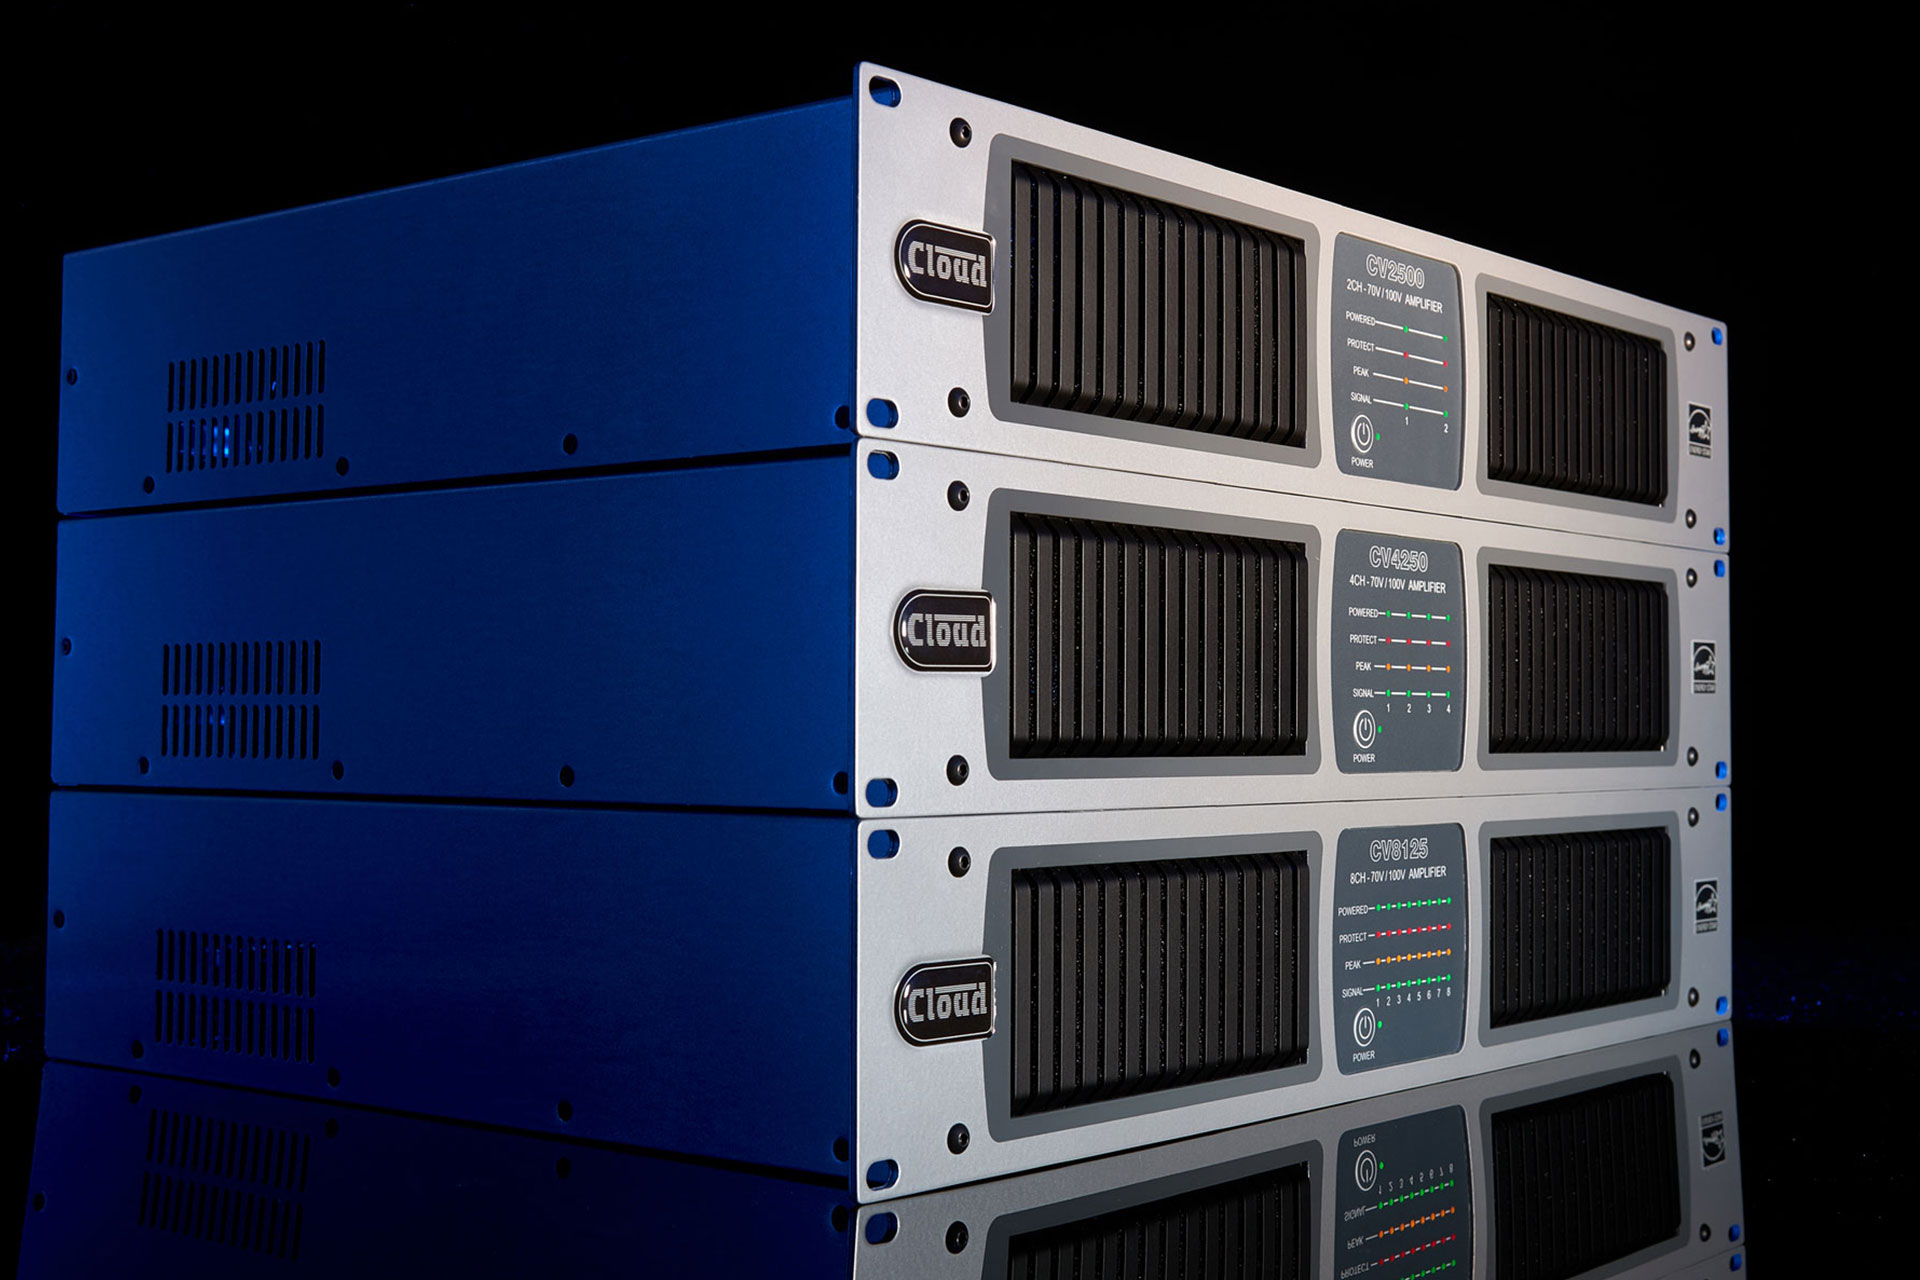 Cloud launch new Power Amplifier series